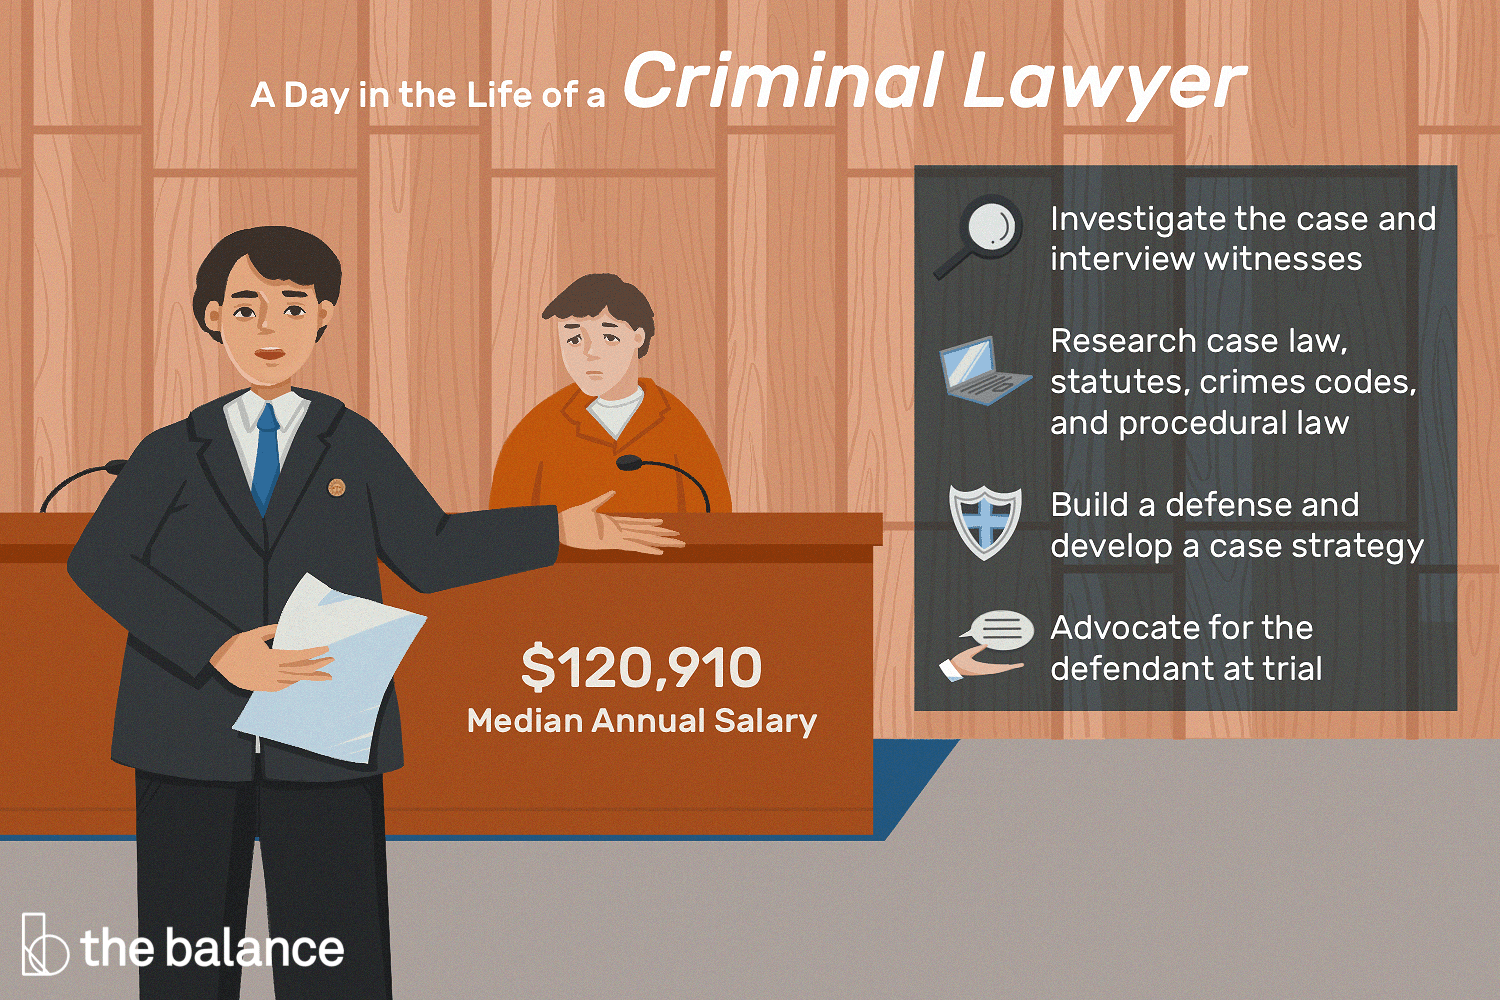 Criminal Lawyer Job Description: Salary, Skills, & More